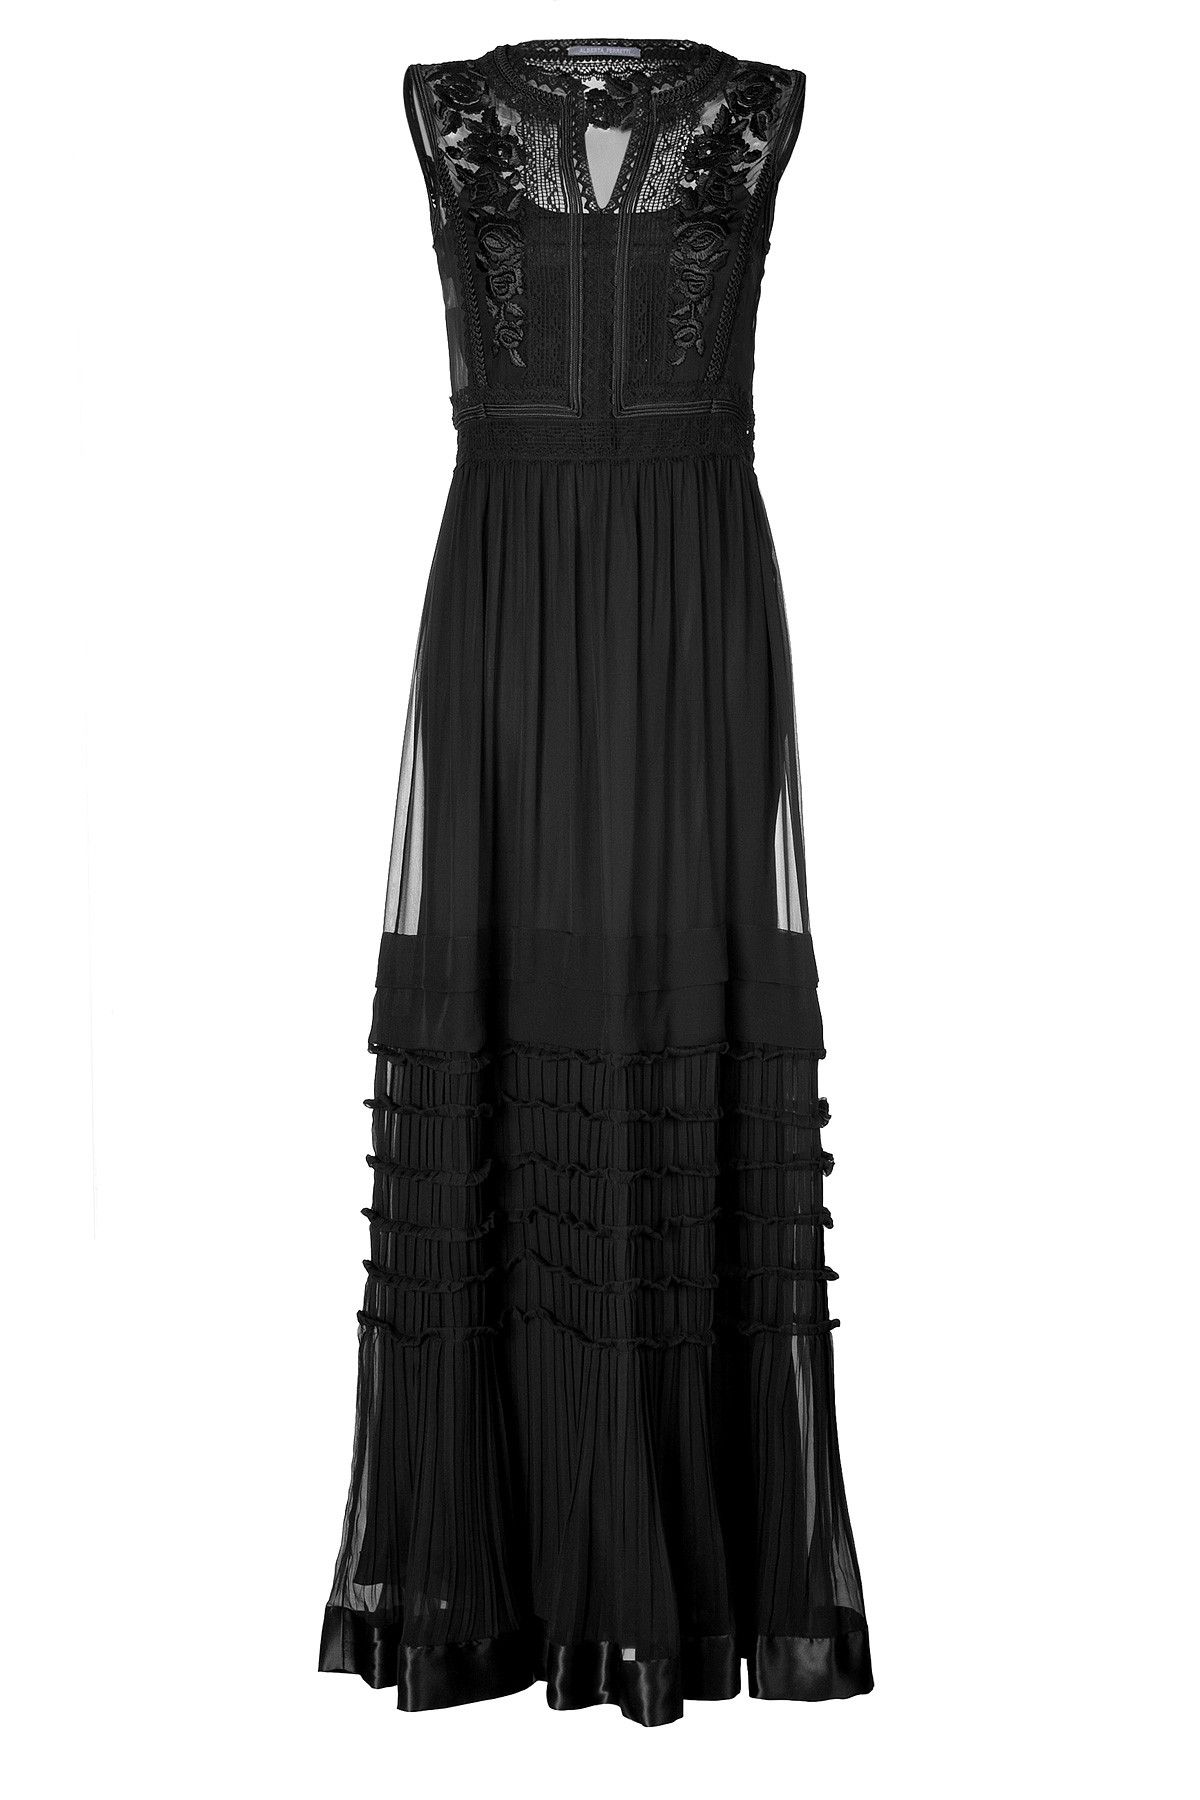 Alberta Ferretti Sleeveless Long Grecian Dress in Black | Lyst